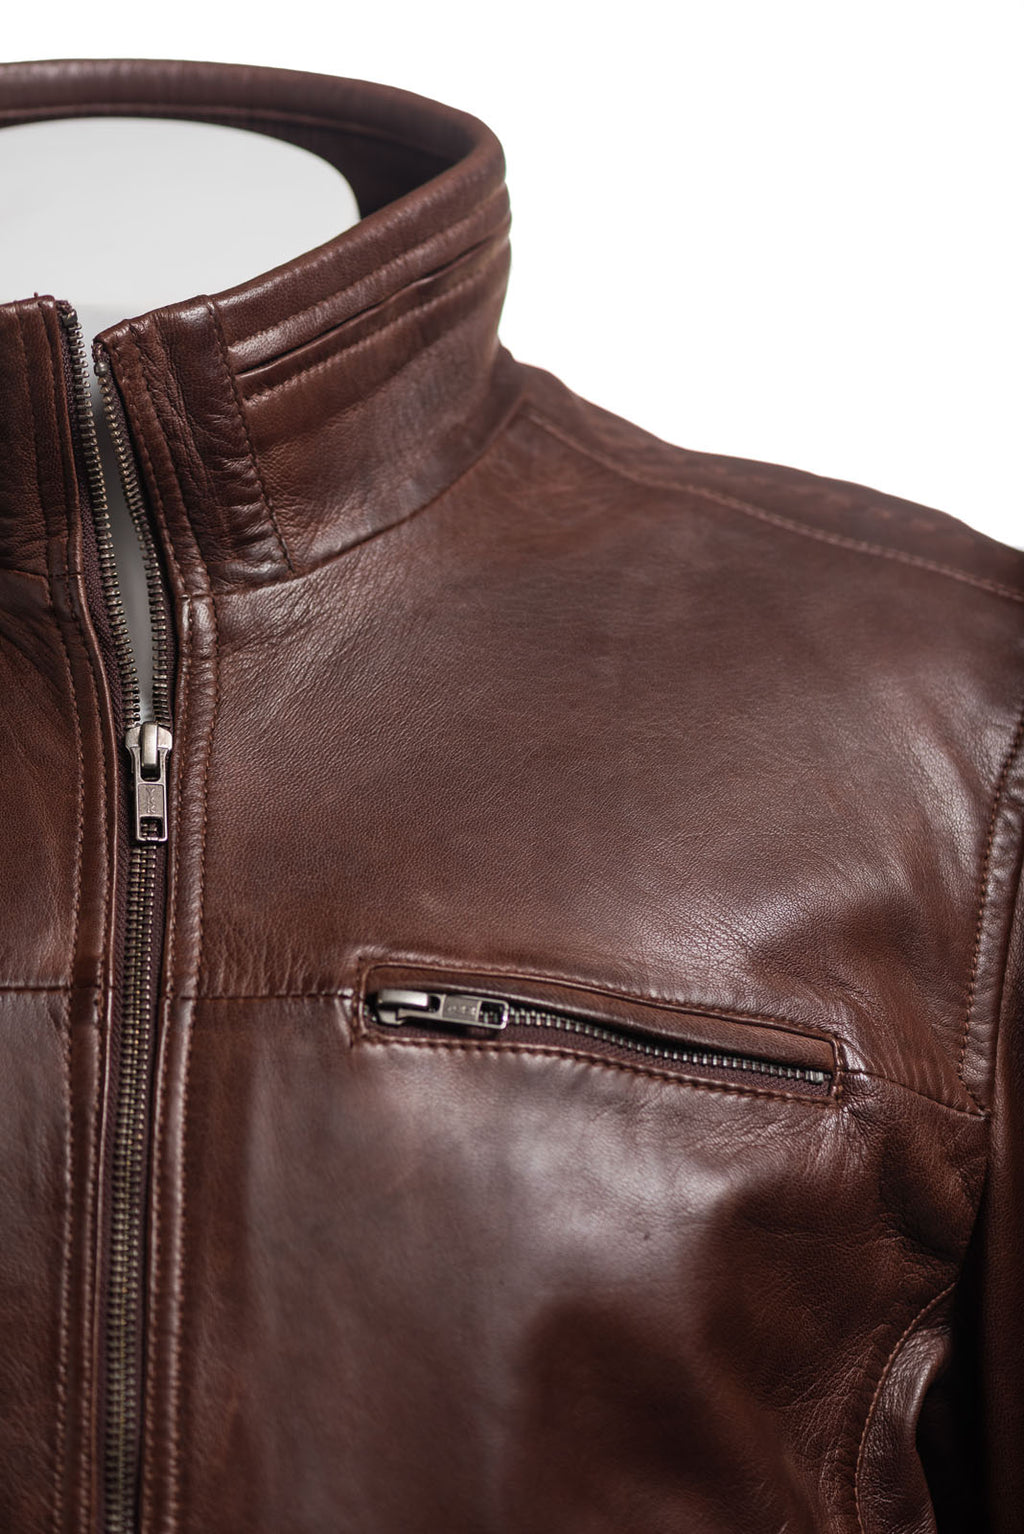 Men's Black Plus Size Funnel Neck Leather Jacket: Luigi